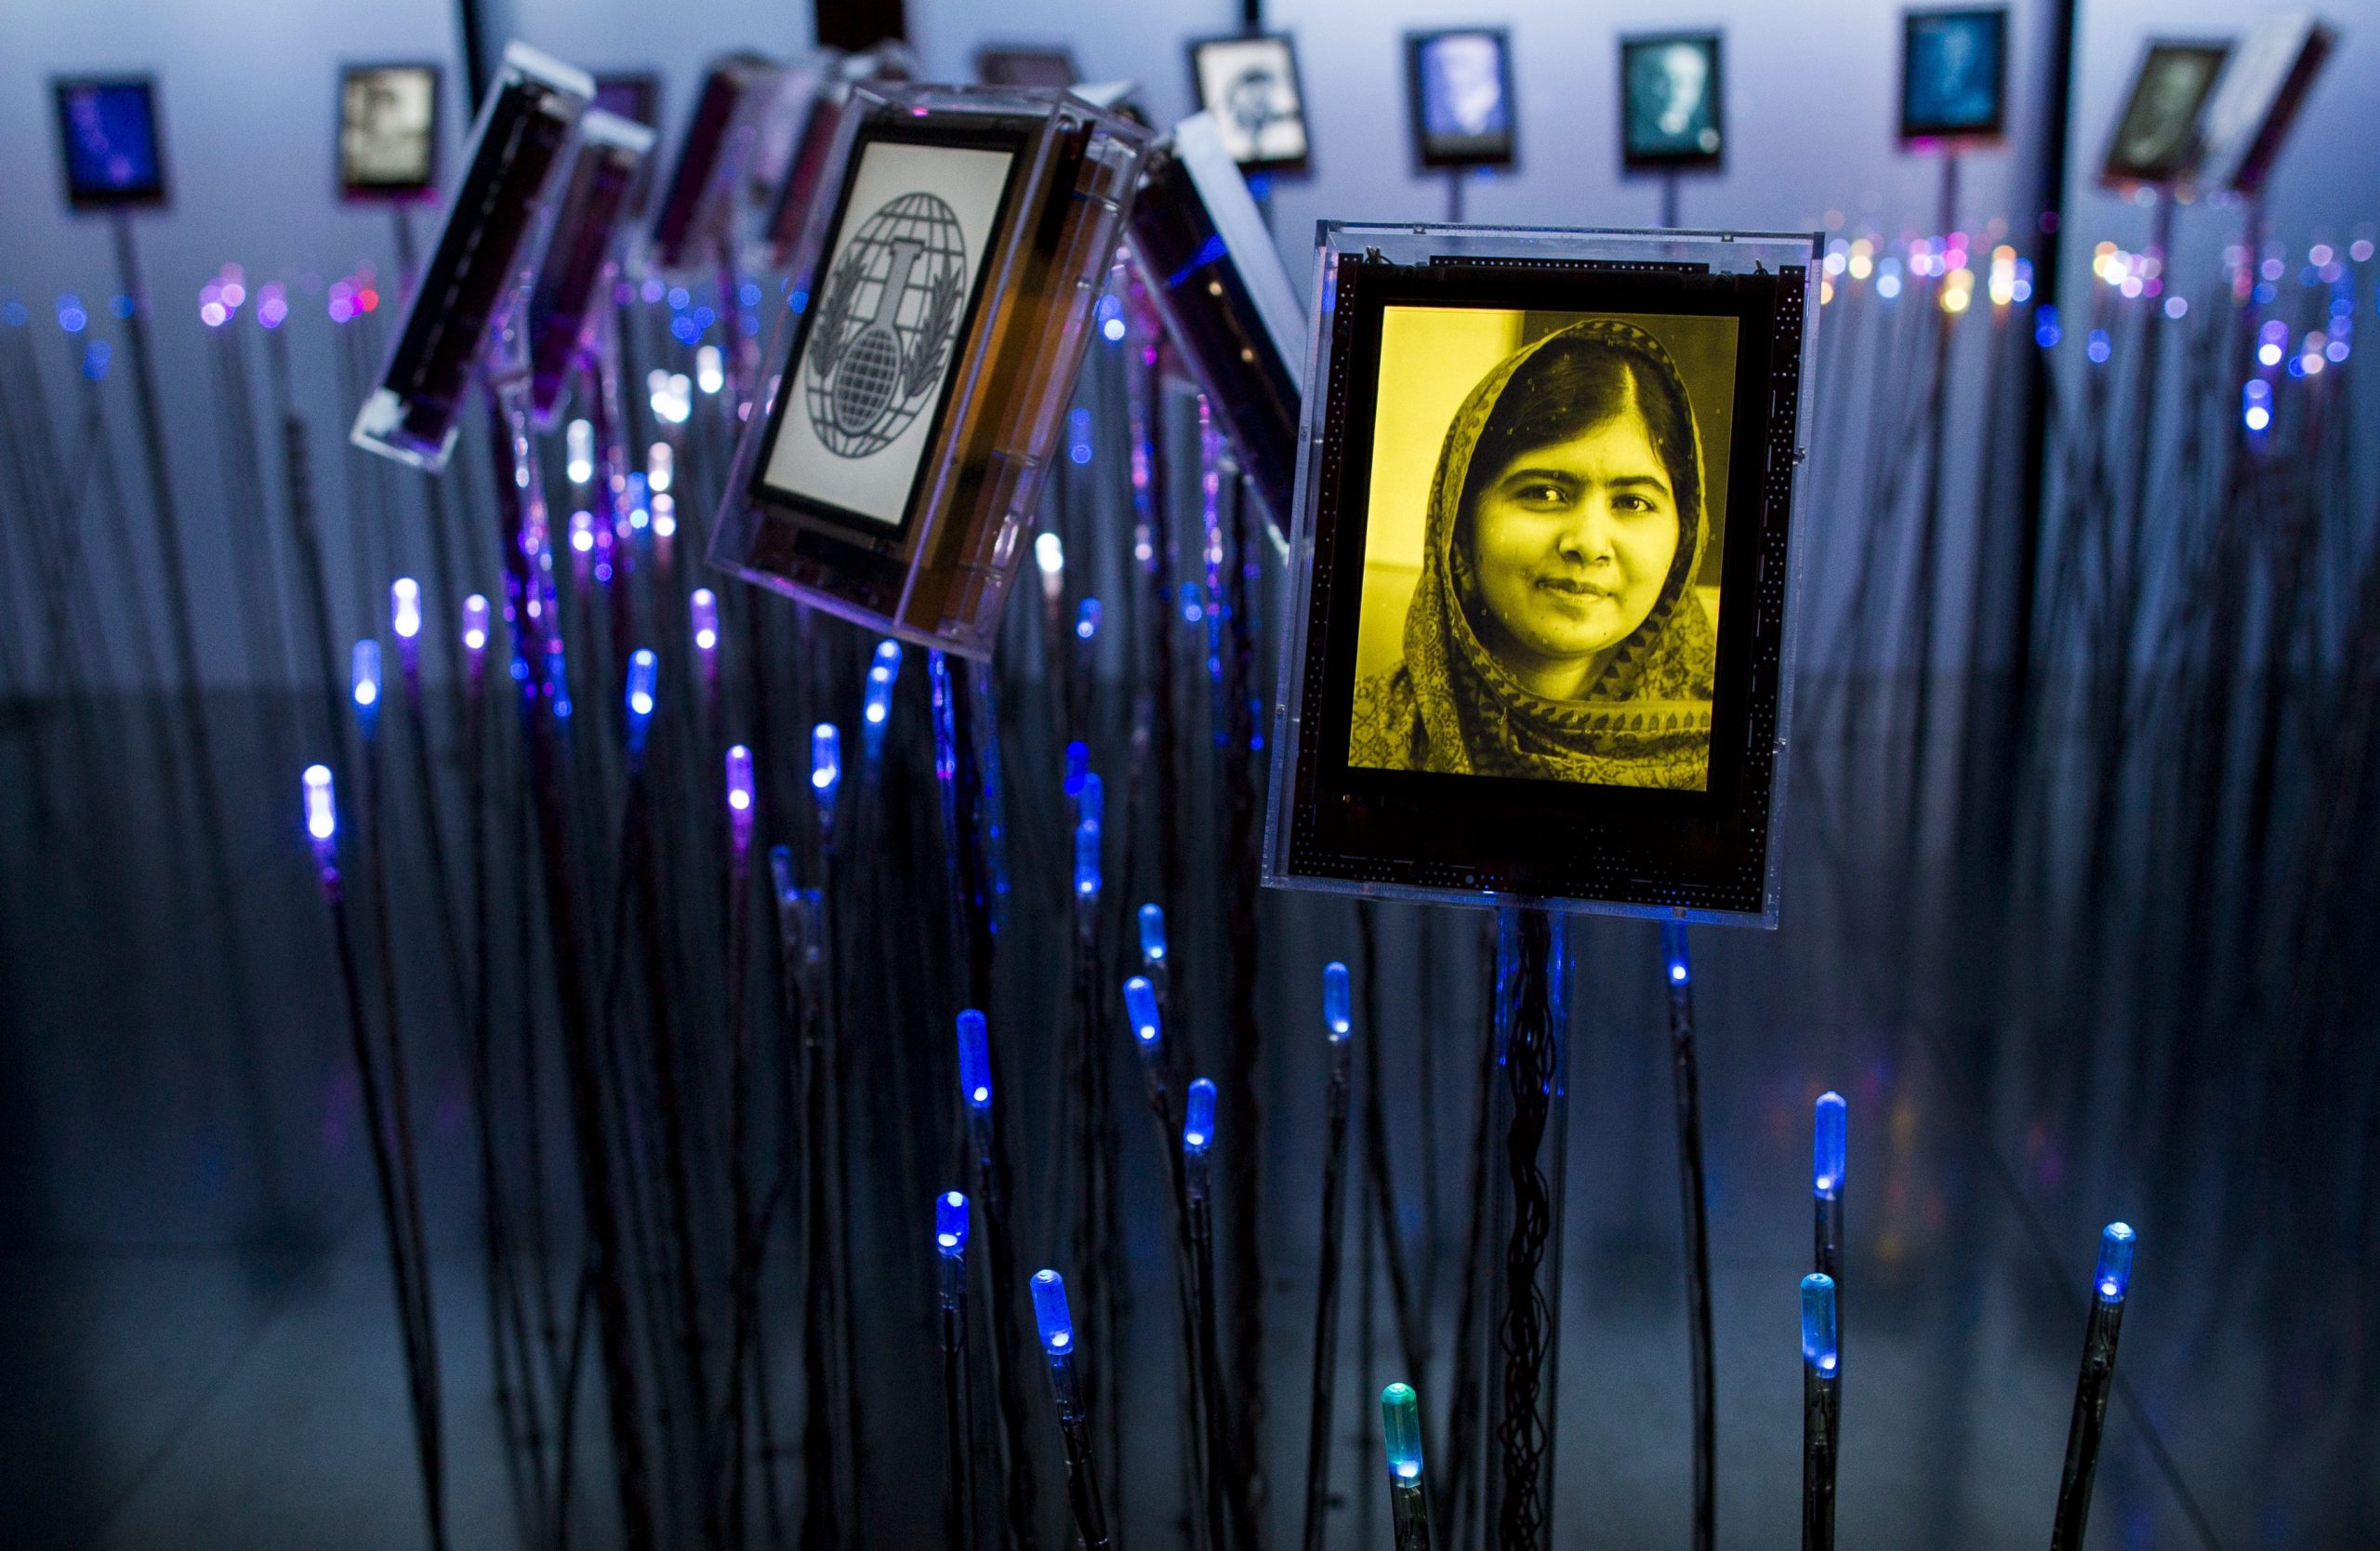 O professor Yousafzai fala com orgulho da filha, Malala